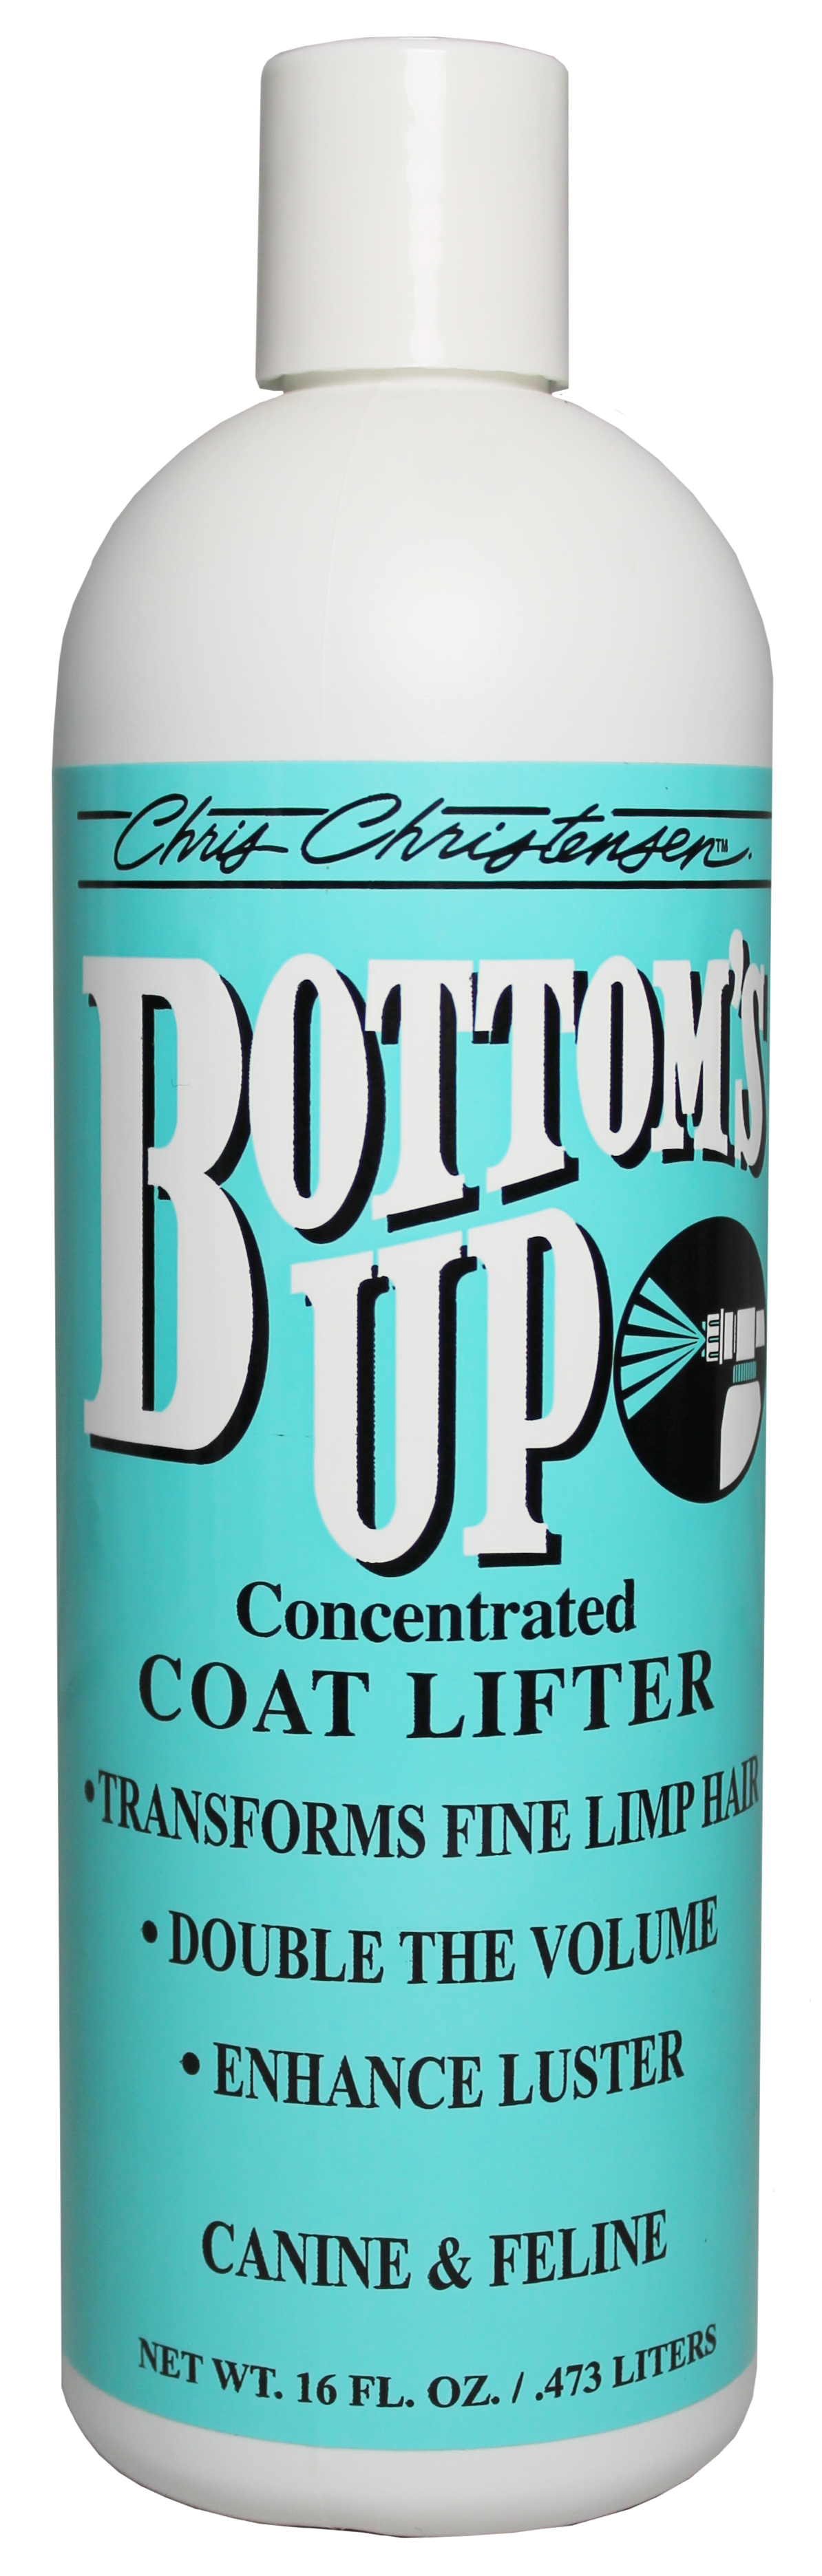 Bottoms Up Coat Lifter